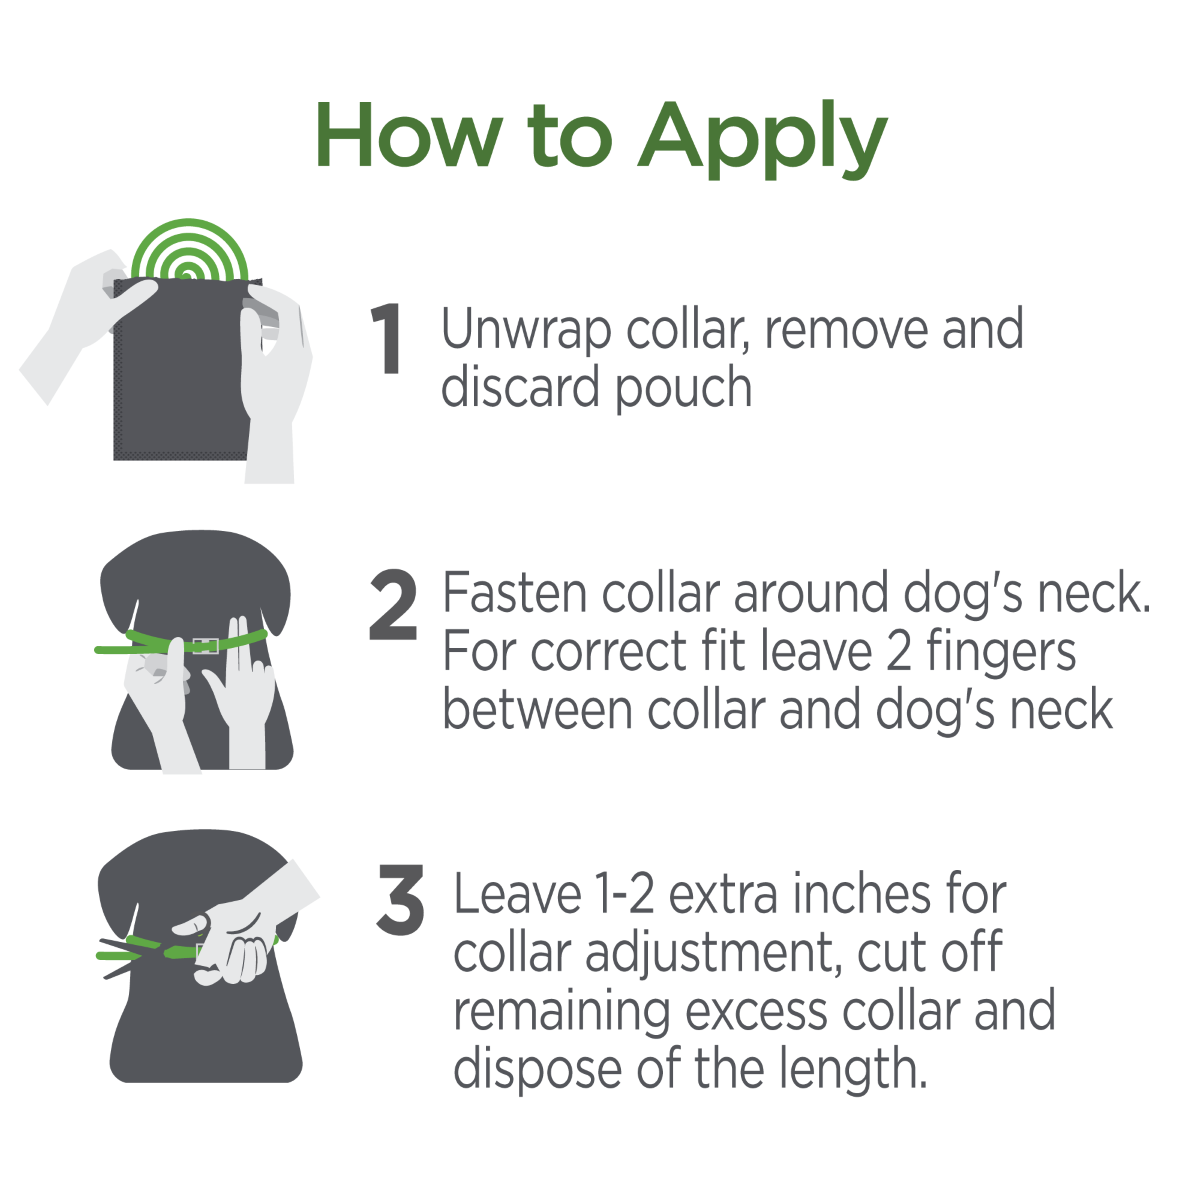 Vetality Naturals Flea & Tick Collar for Dogs